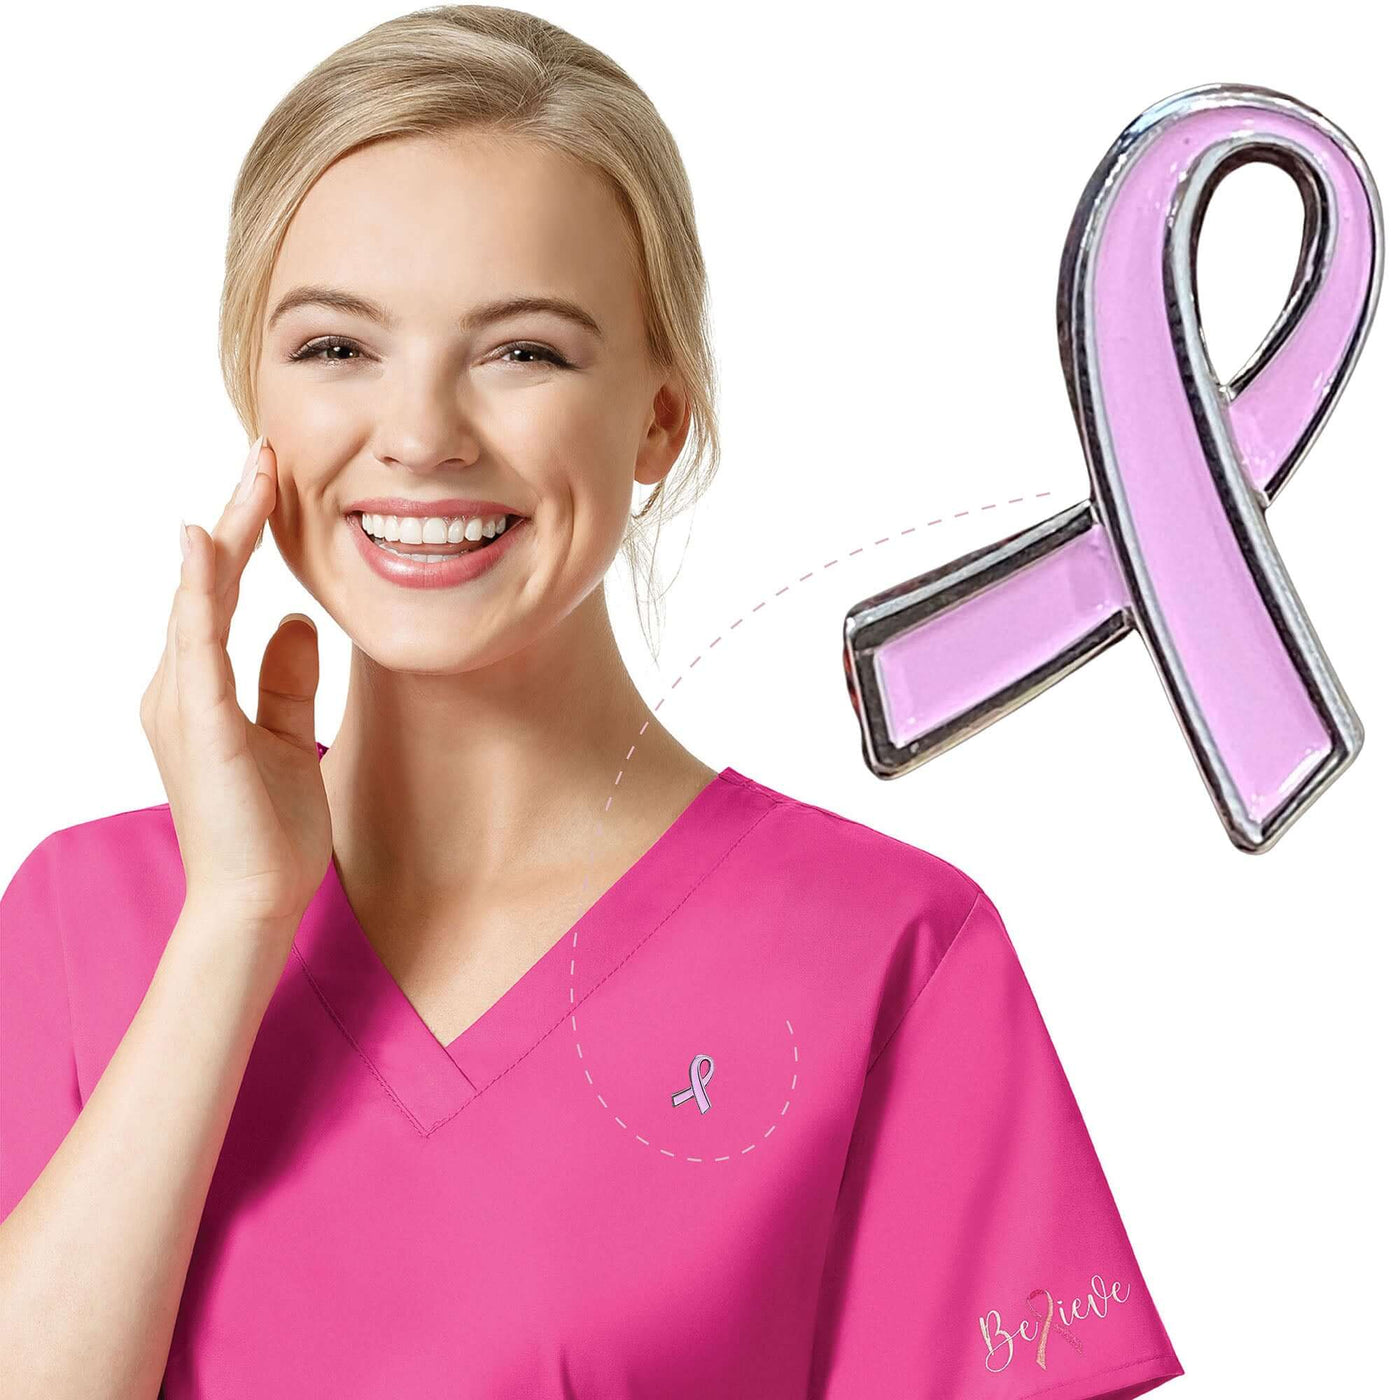 PINK - Breast Cancer Awareness Pin